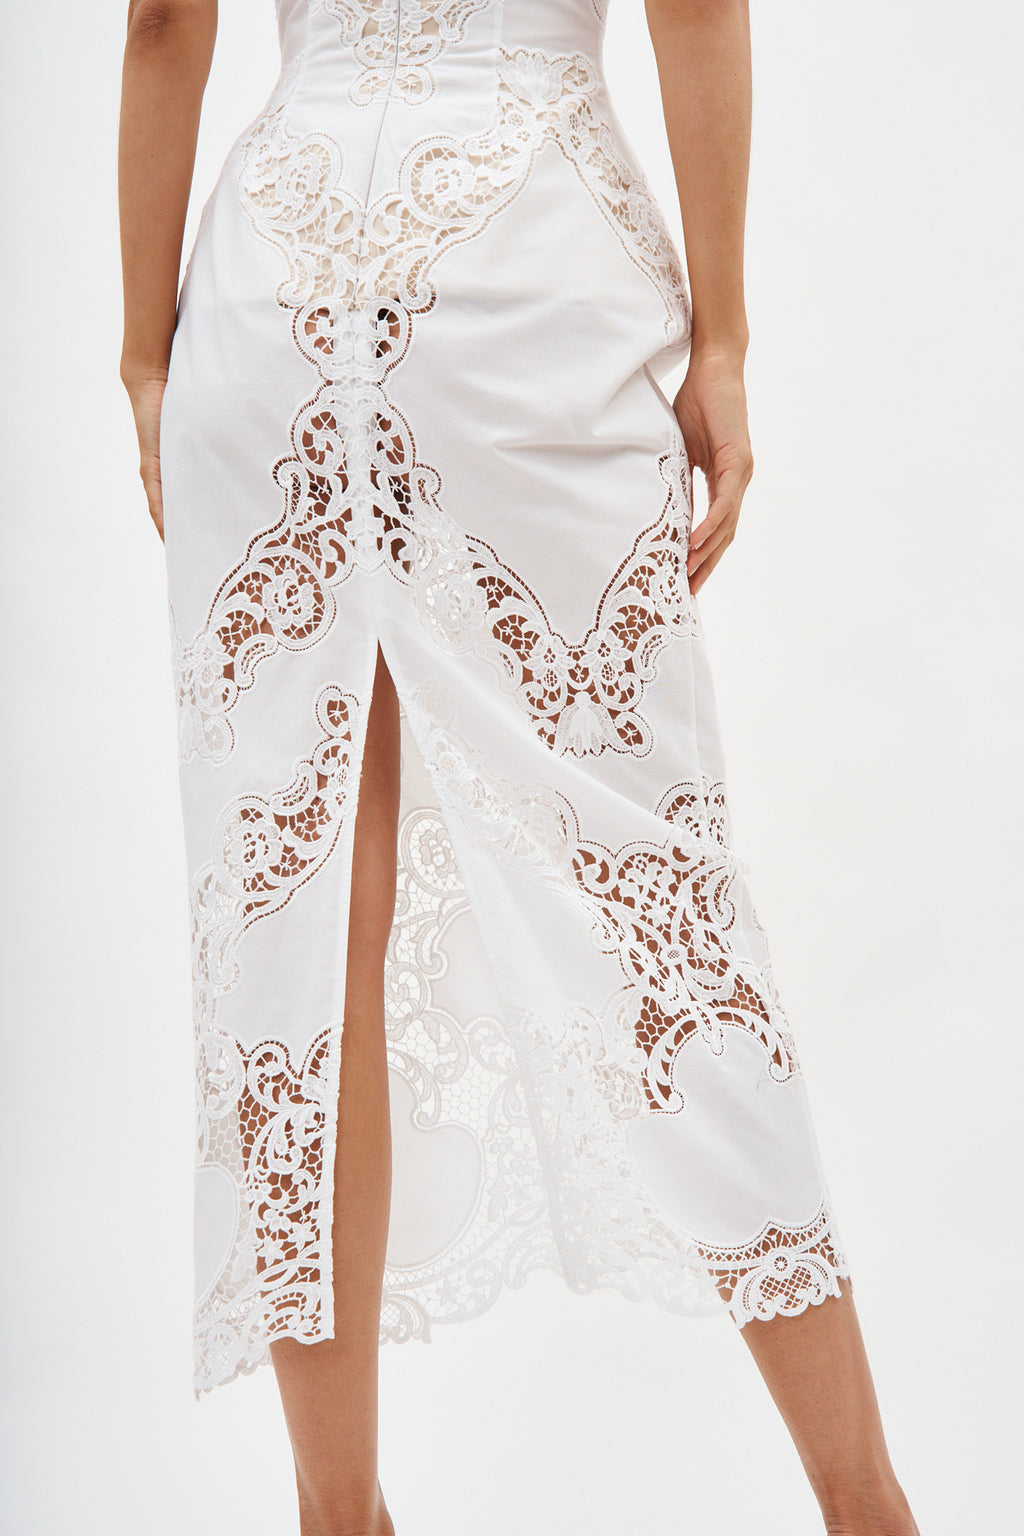 Strapless Hourglass Lace Corset White Midi Dress